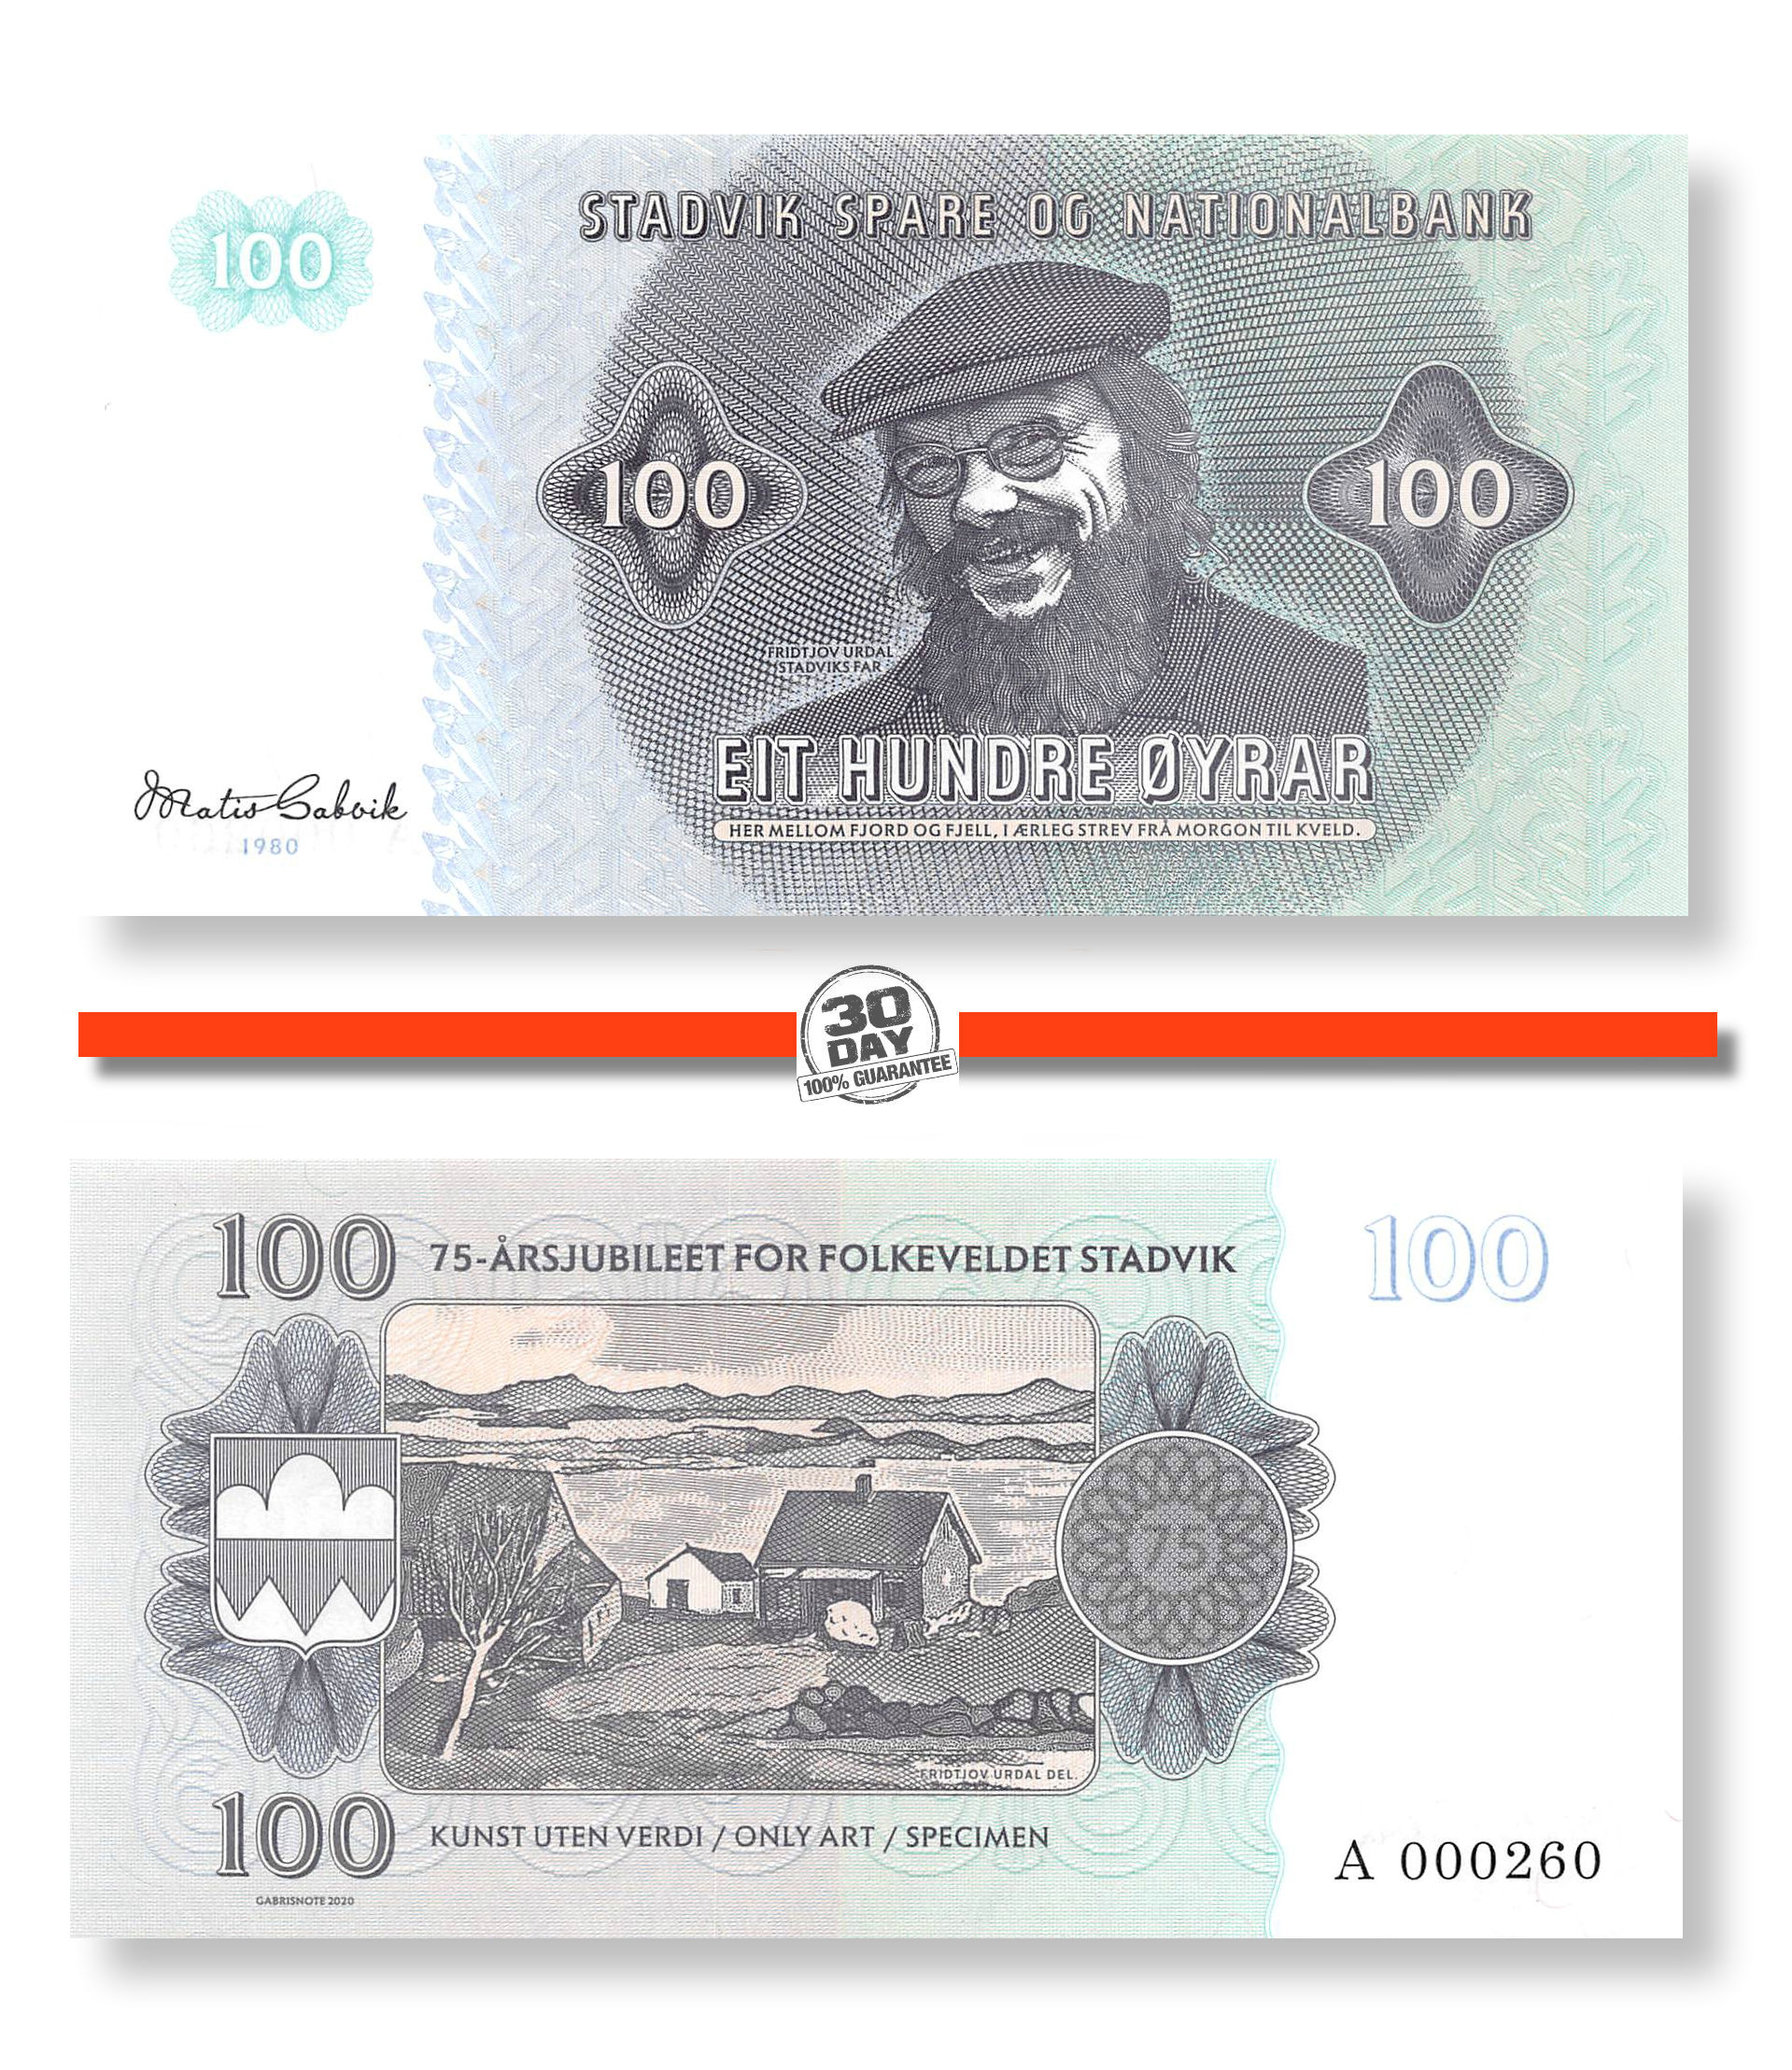 Matej Gabris 50 Ore Norway 2020 Test banknote Specimen Private note 